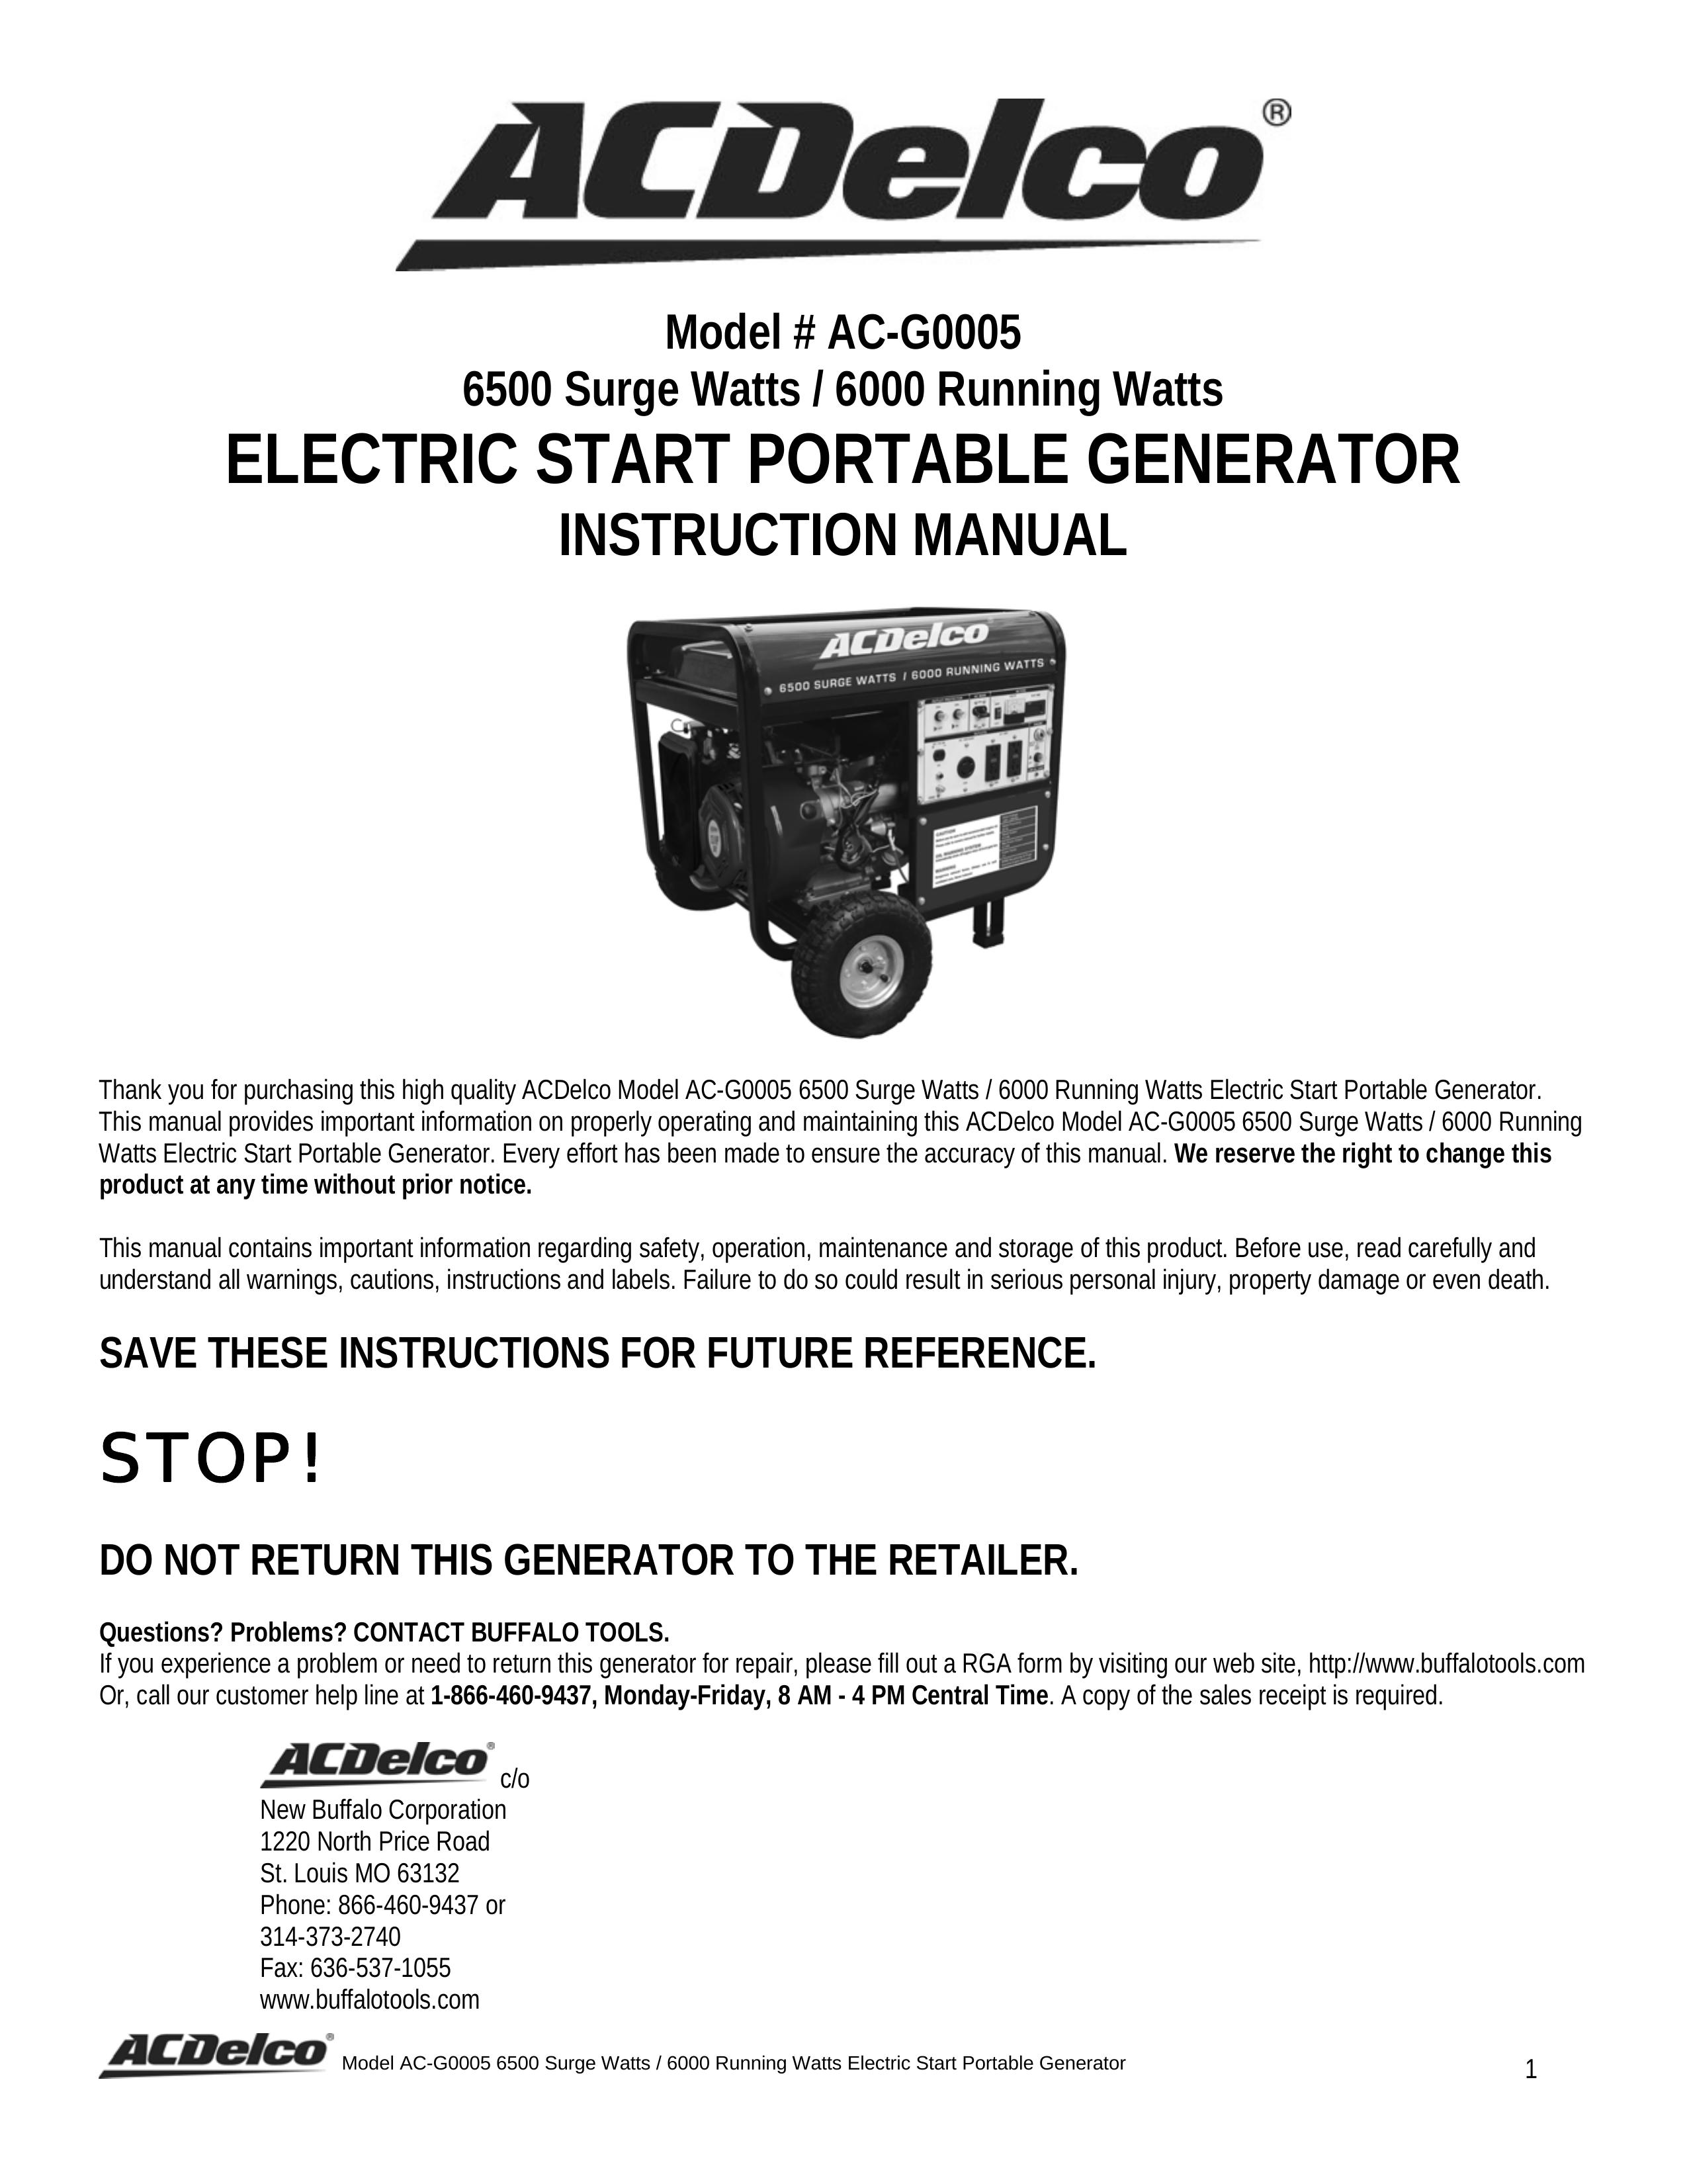 ACDelco AC-G0005 Portable Generator User Manual